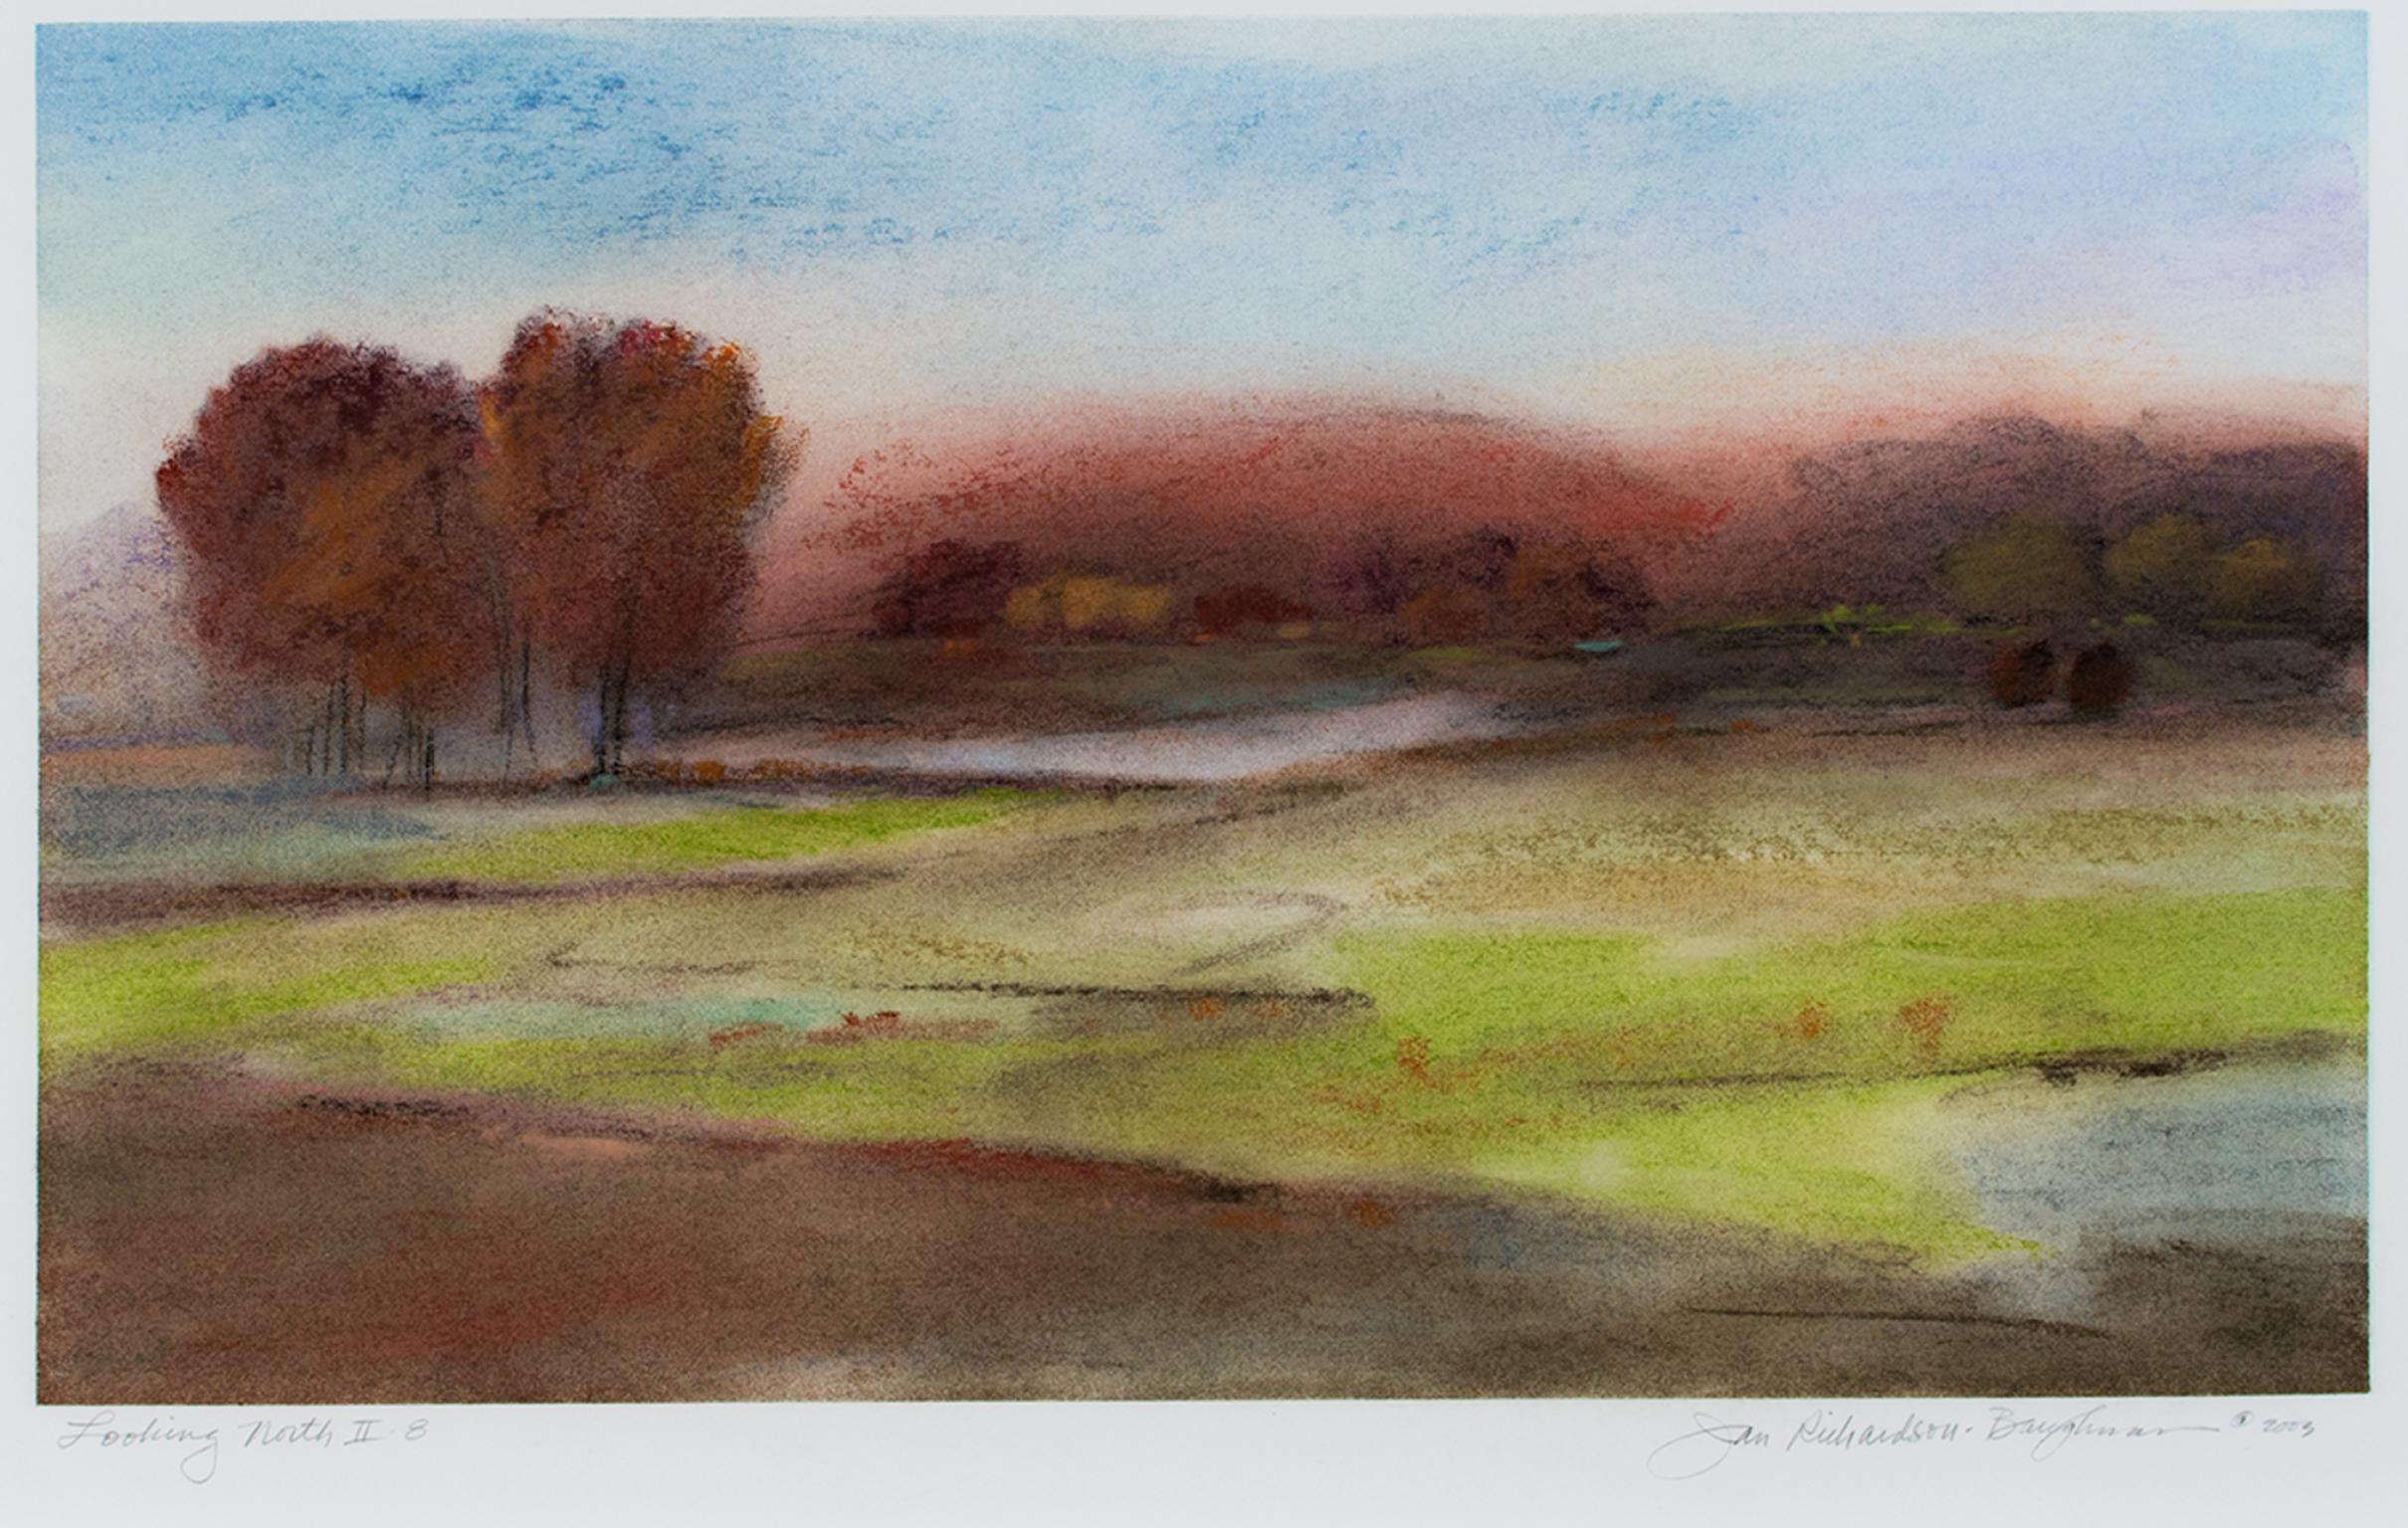 "Looking North II-8, " Pastel Autumn Landscape signed by Jan Richardson-Baughman